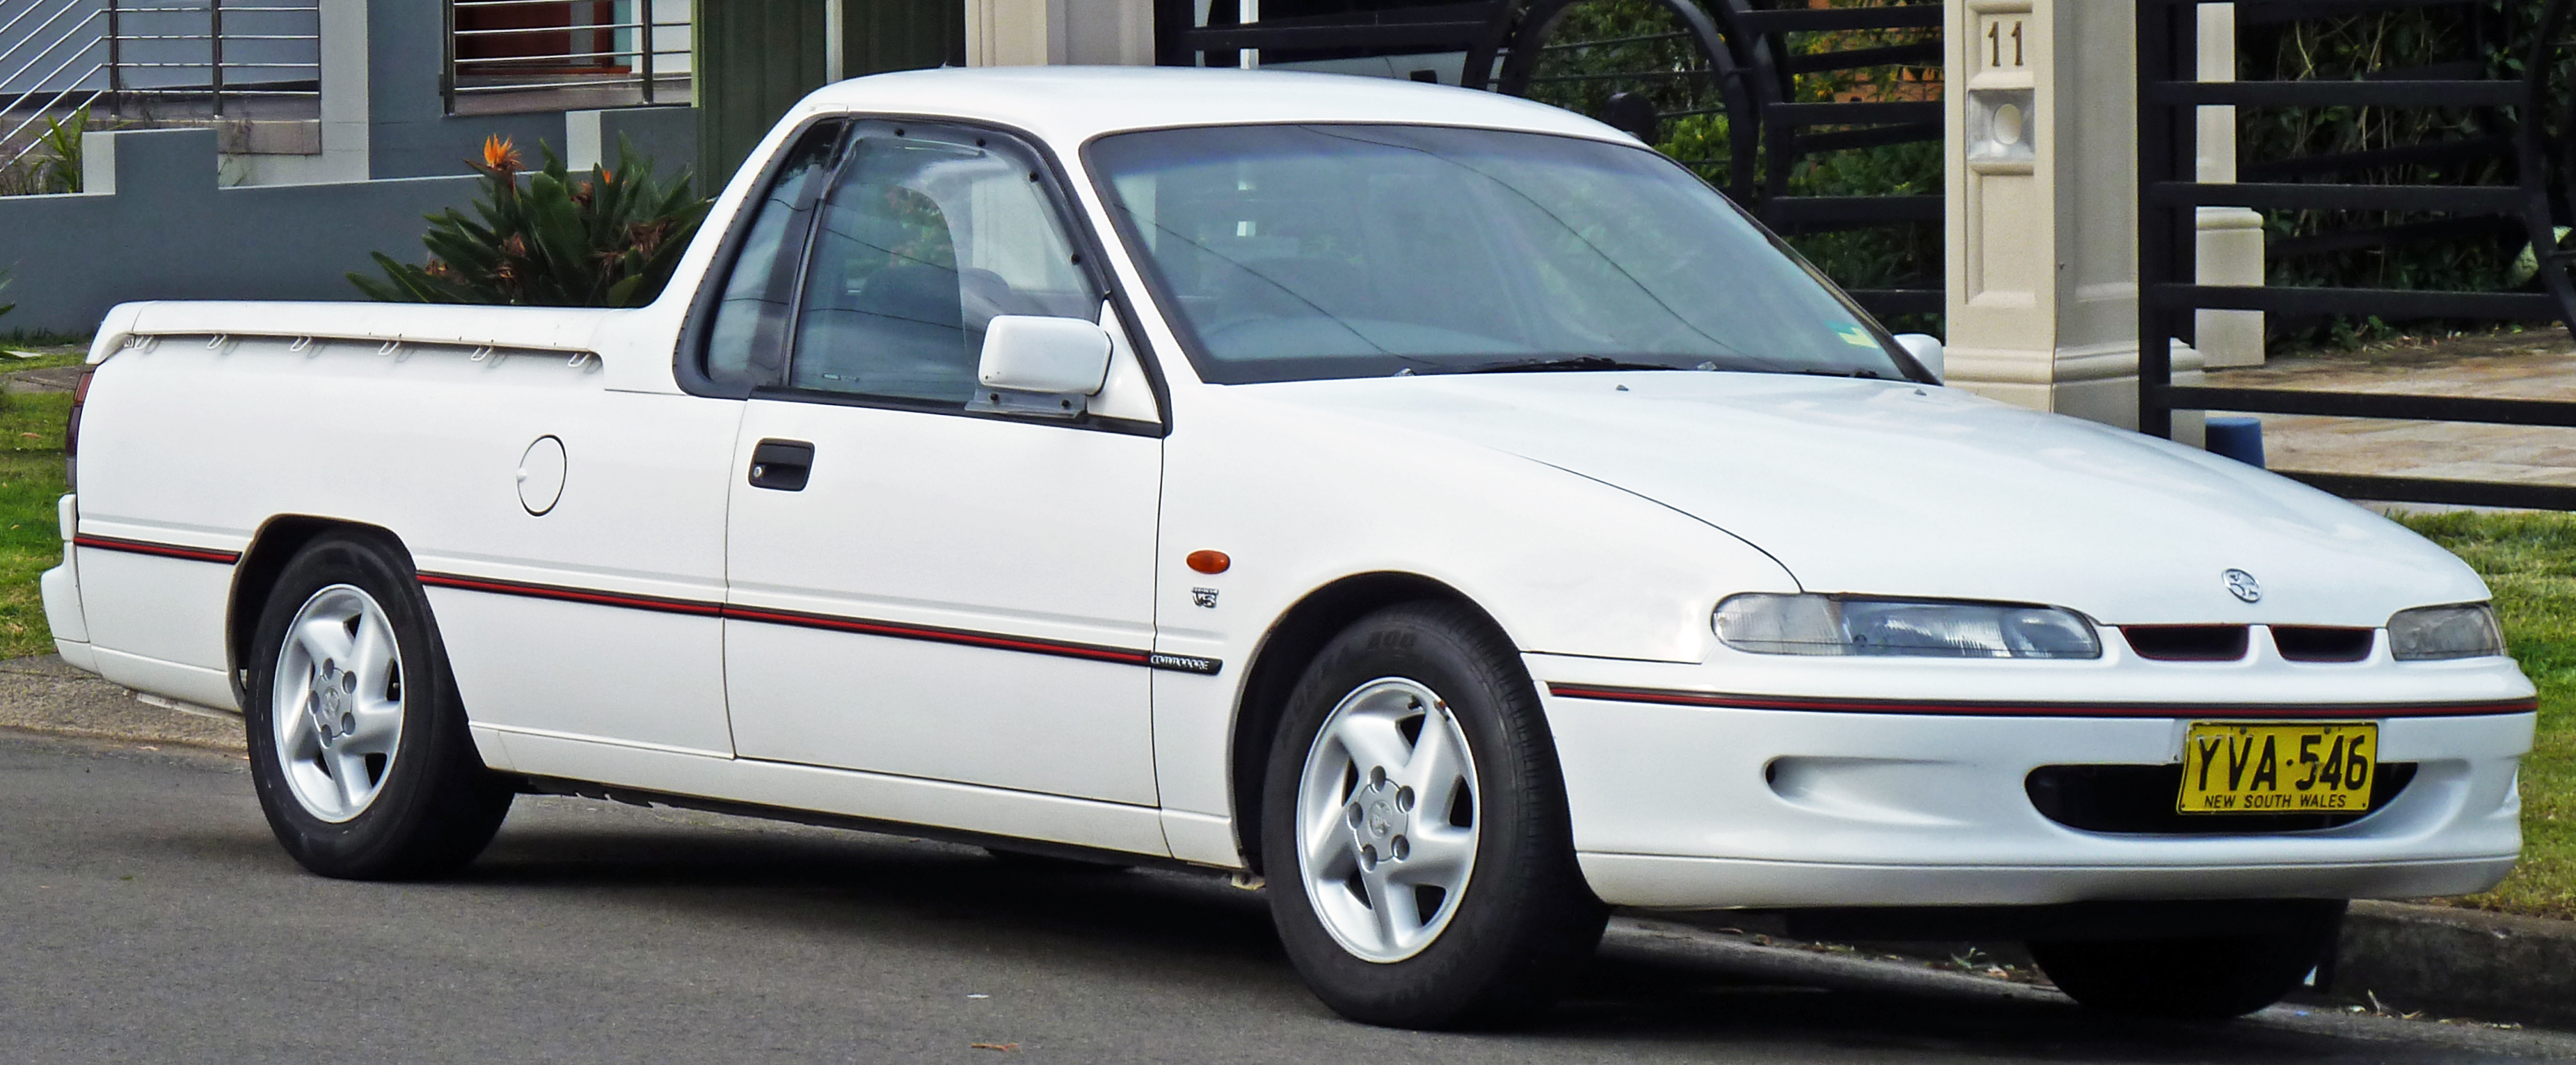 Holden Commodore 1998 photo - 3